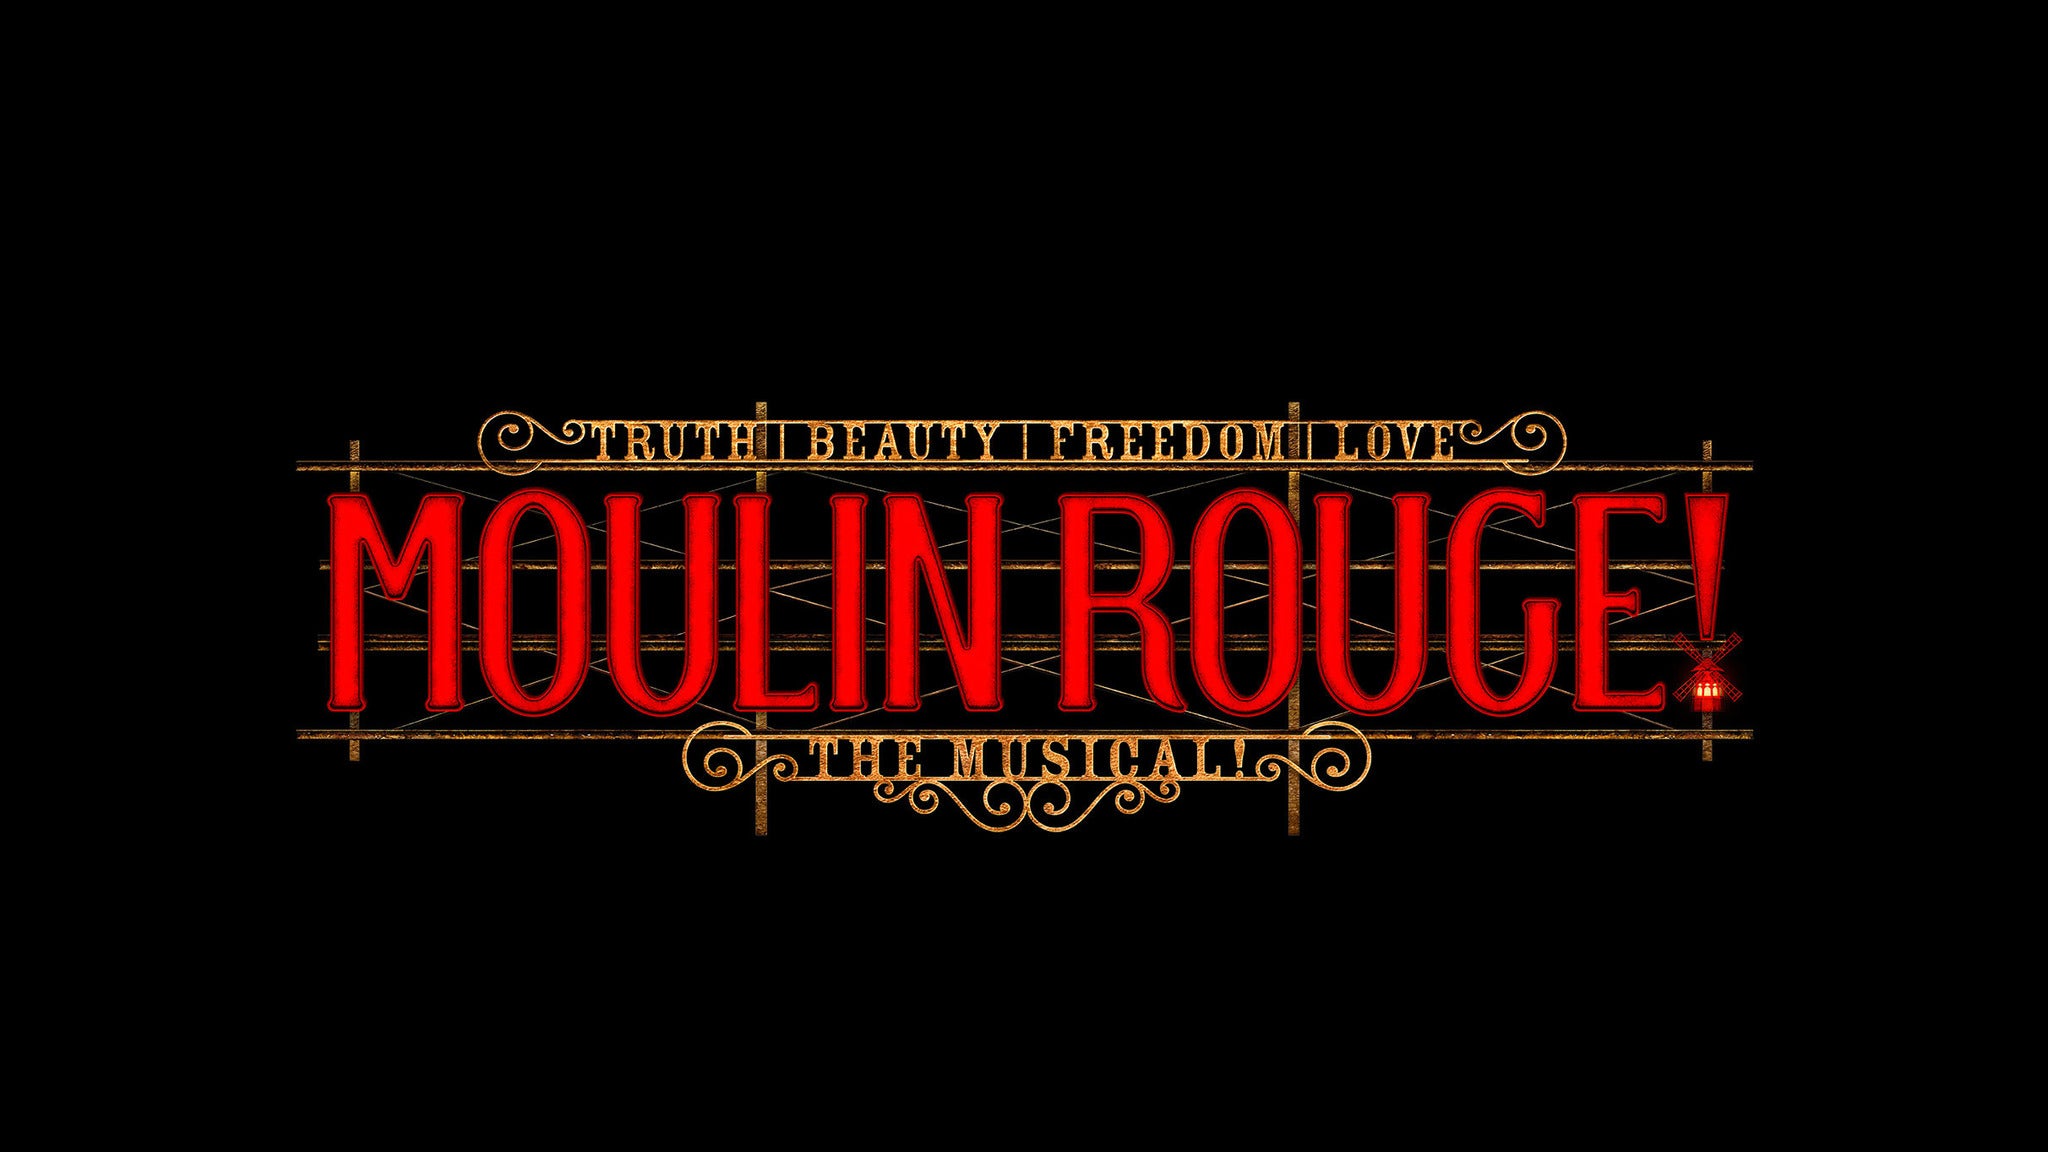 Moulin Rouge! The Musical (NY) presale information on freepresalepasswords.com